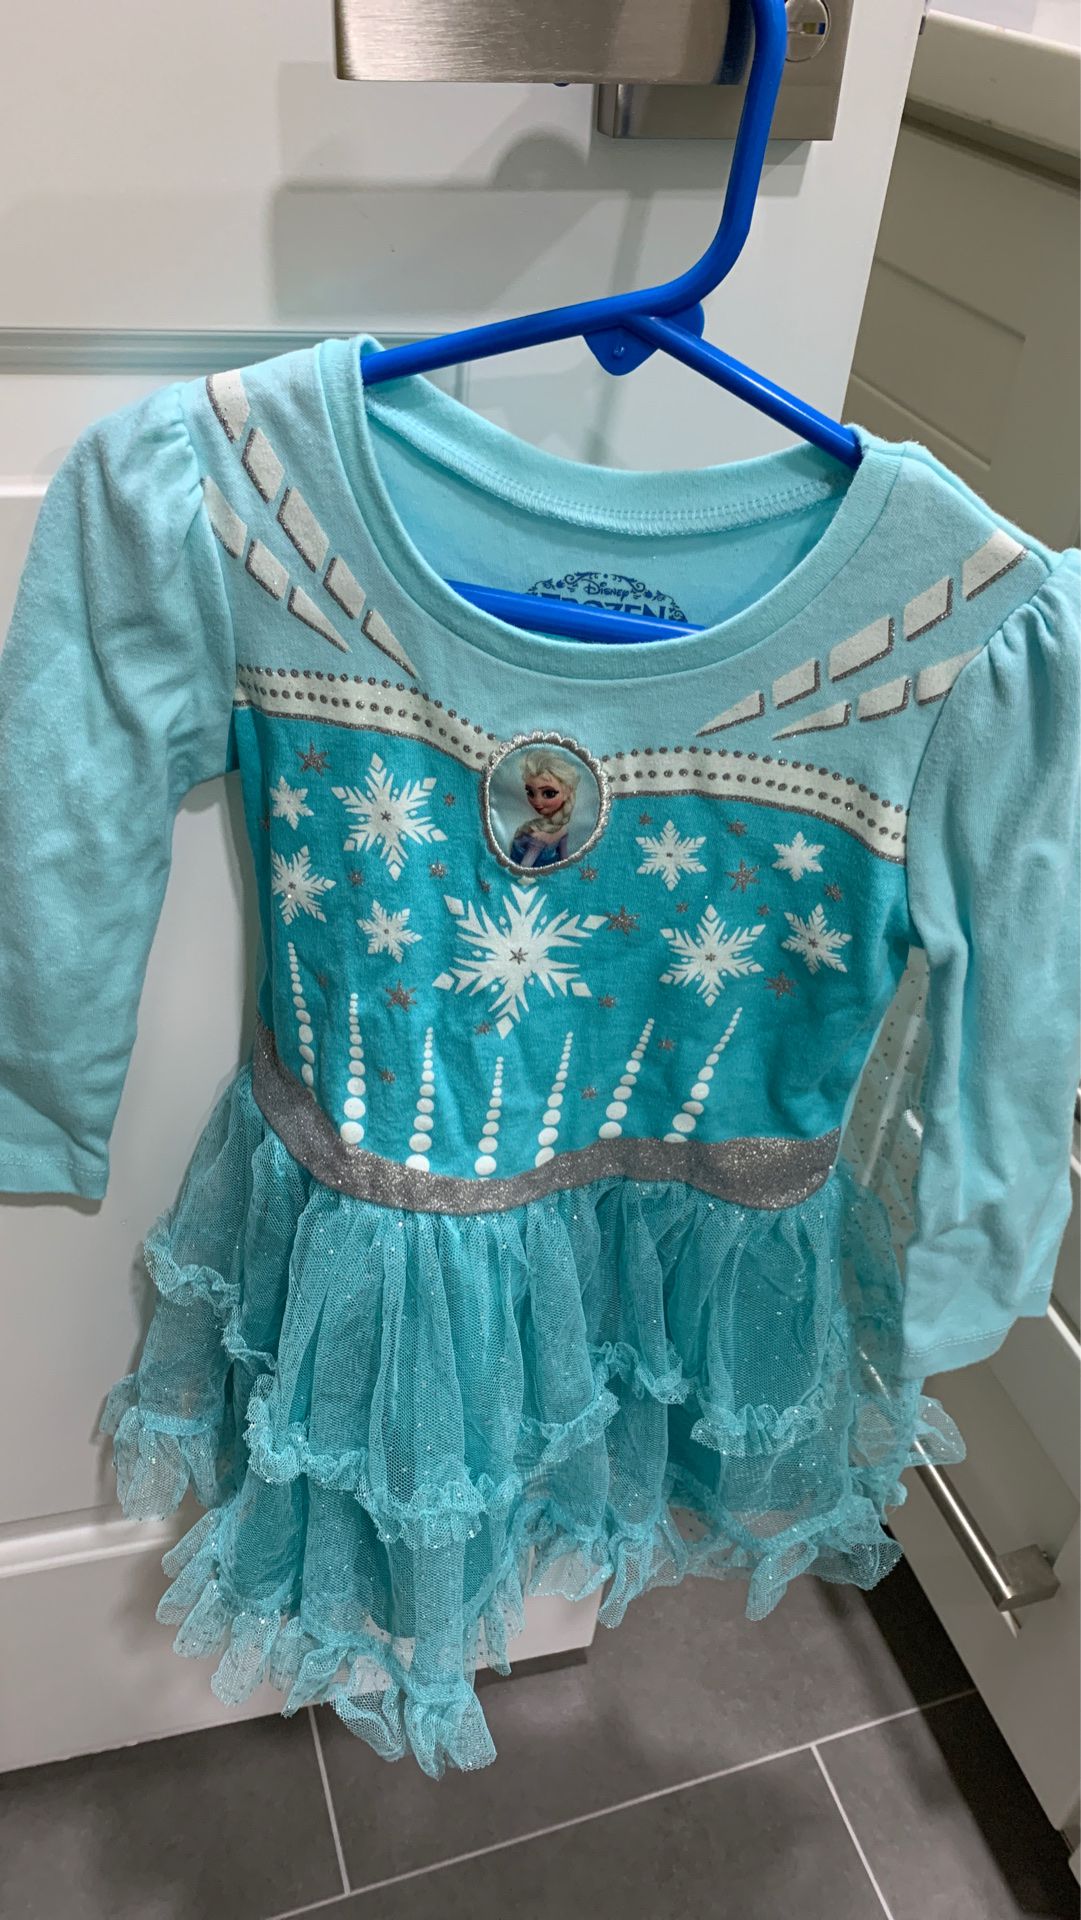 Elsa dress size 3T